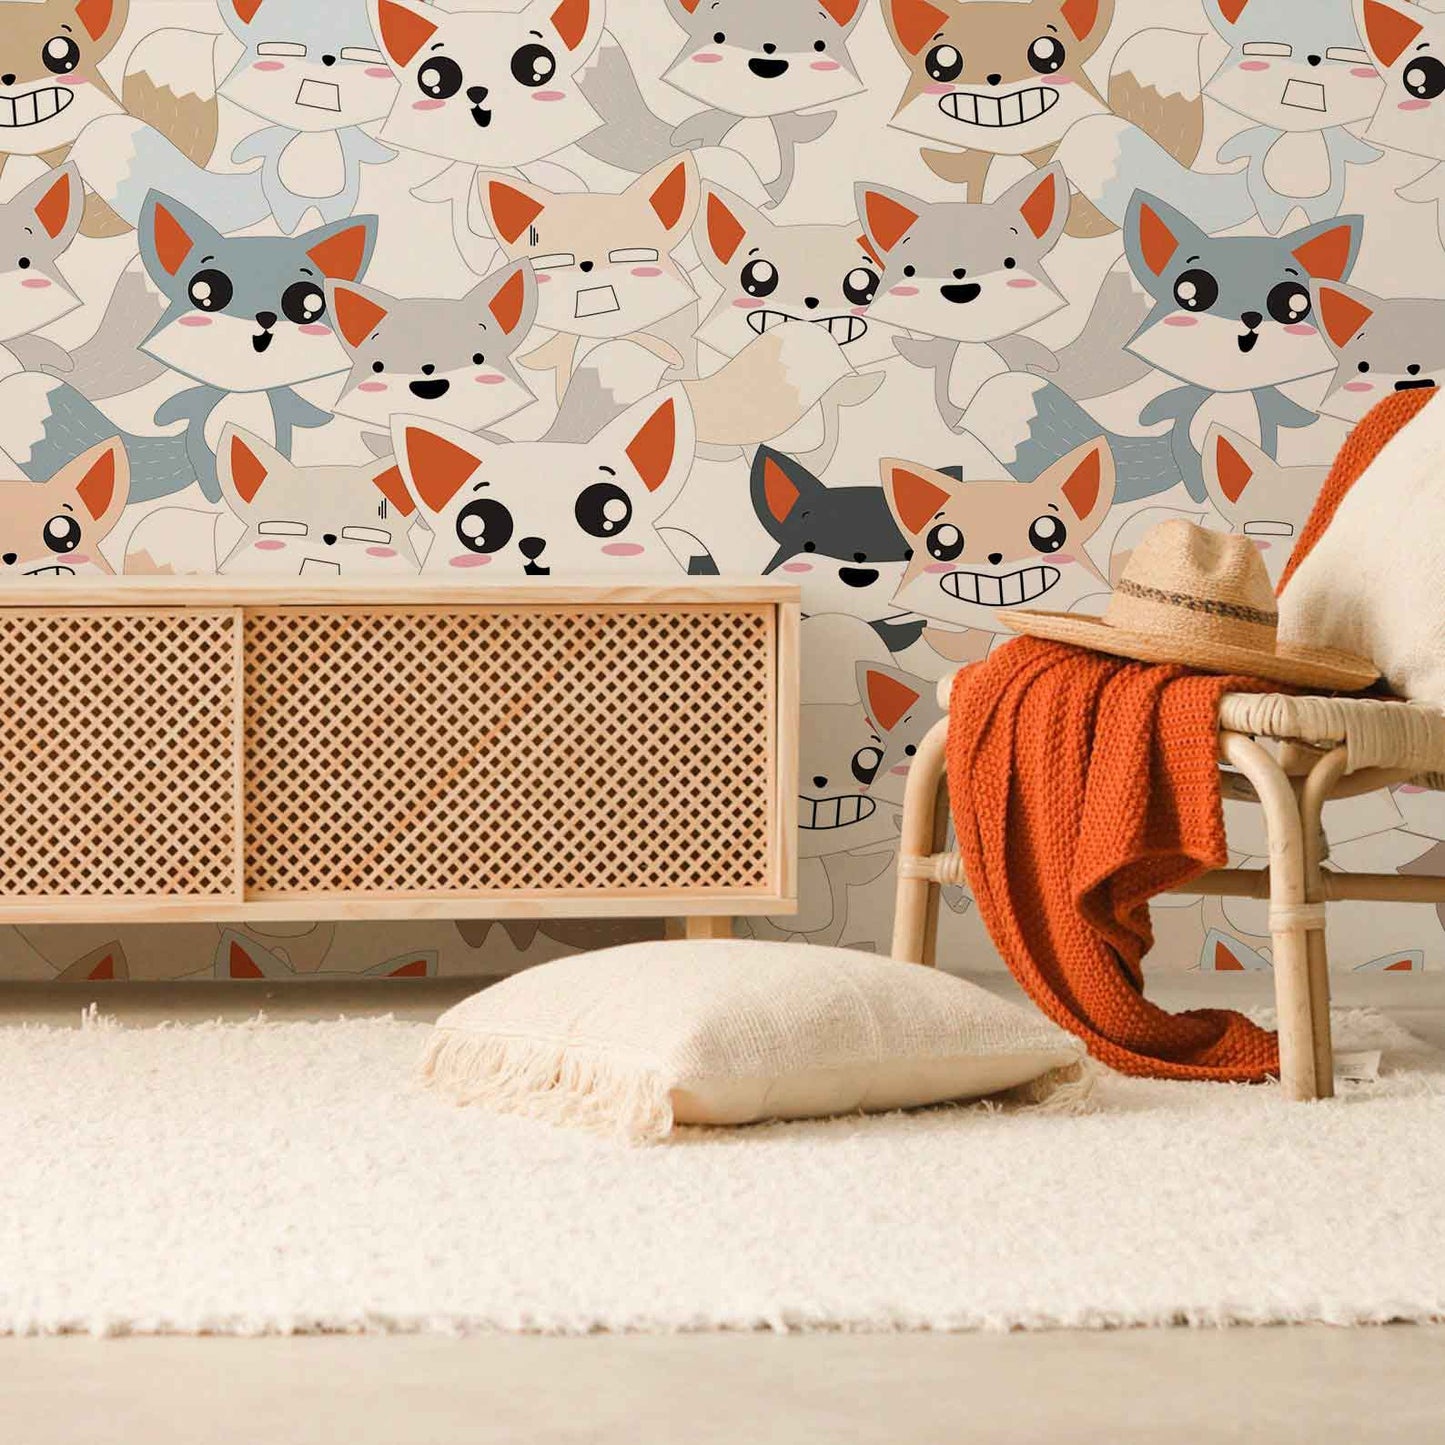 cute suprising fox cartoon wallpaper mural customized for living room